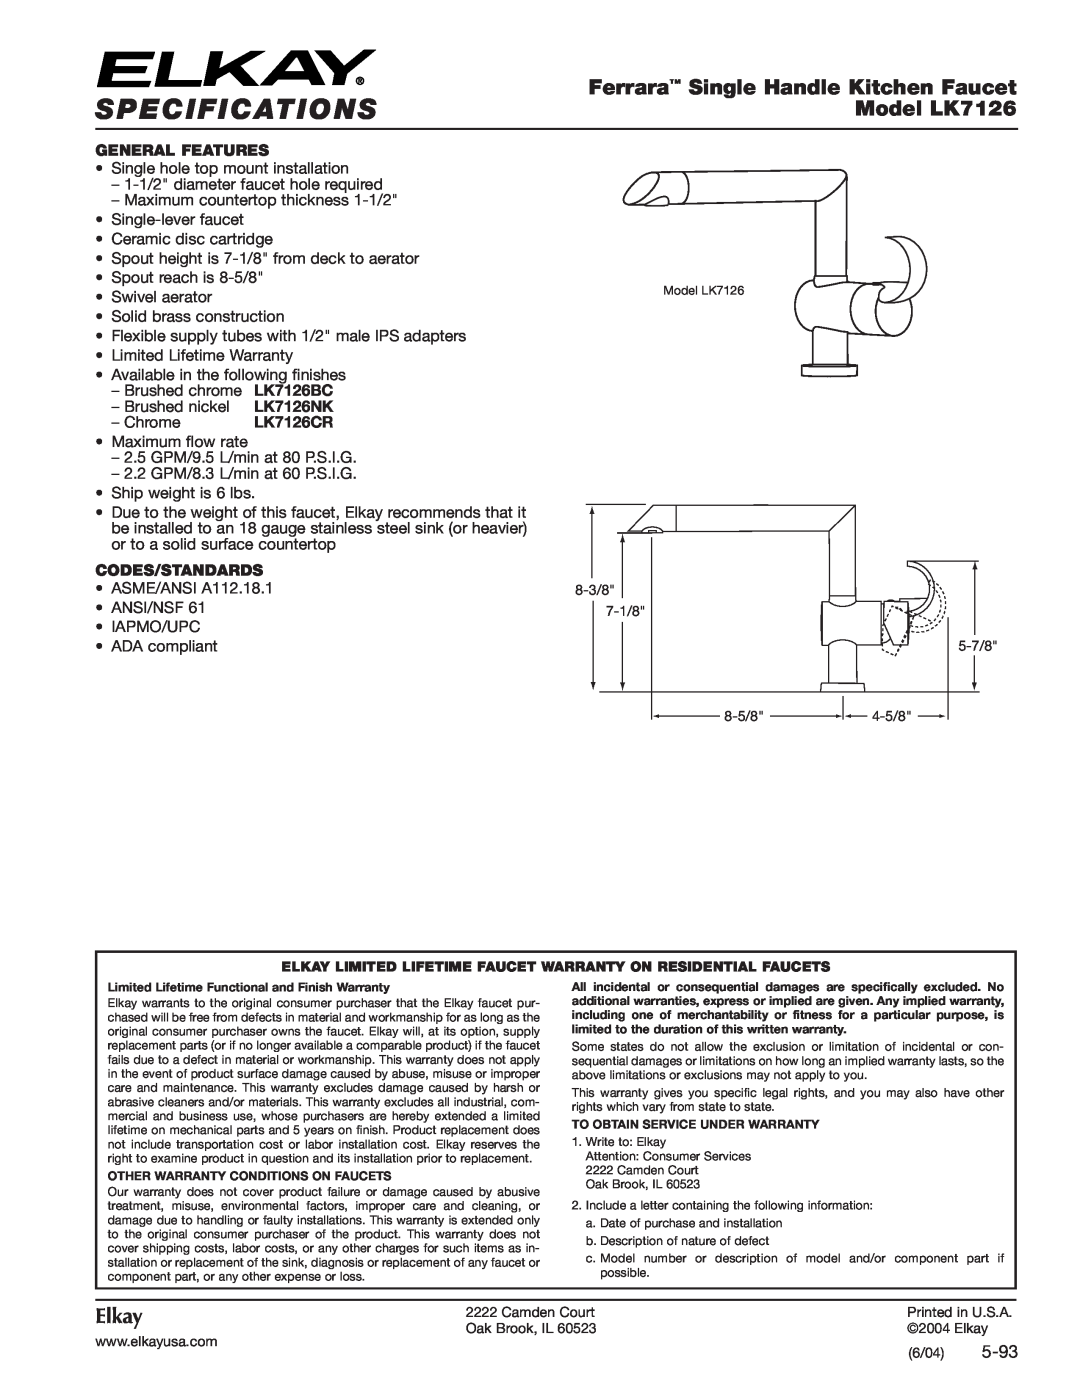 Elkay specifications Specifications, Ferrara Single Handle Kitchen Faucet, Model LK7126, Elkay, 5-93, General Features 